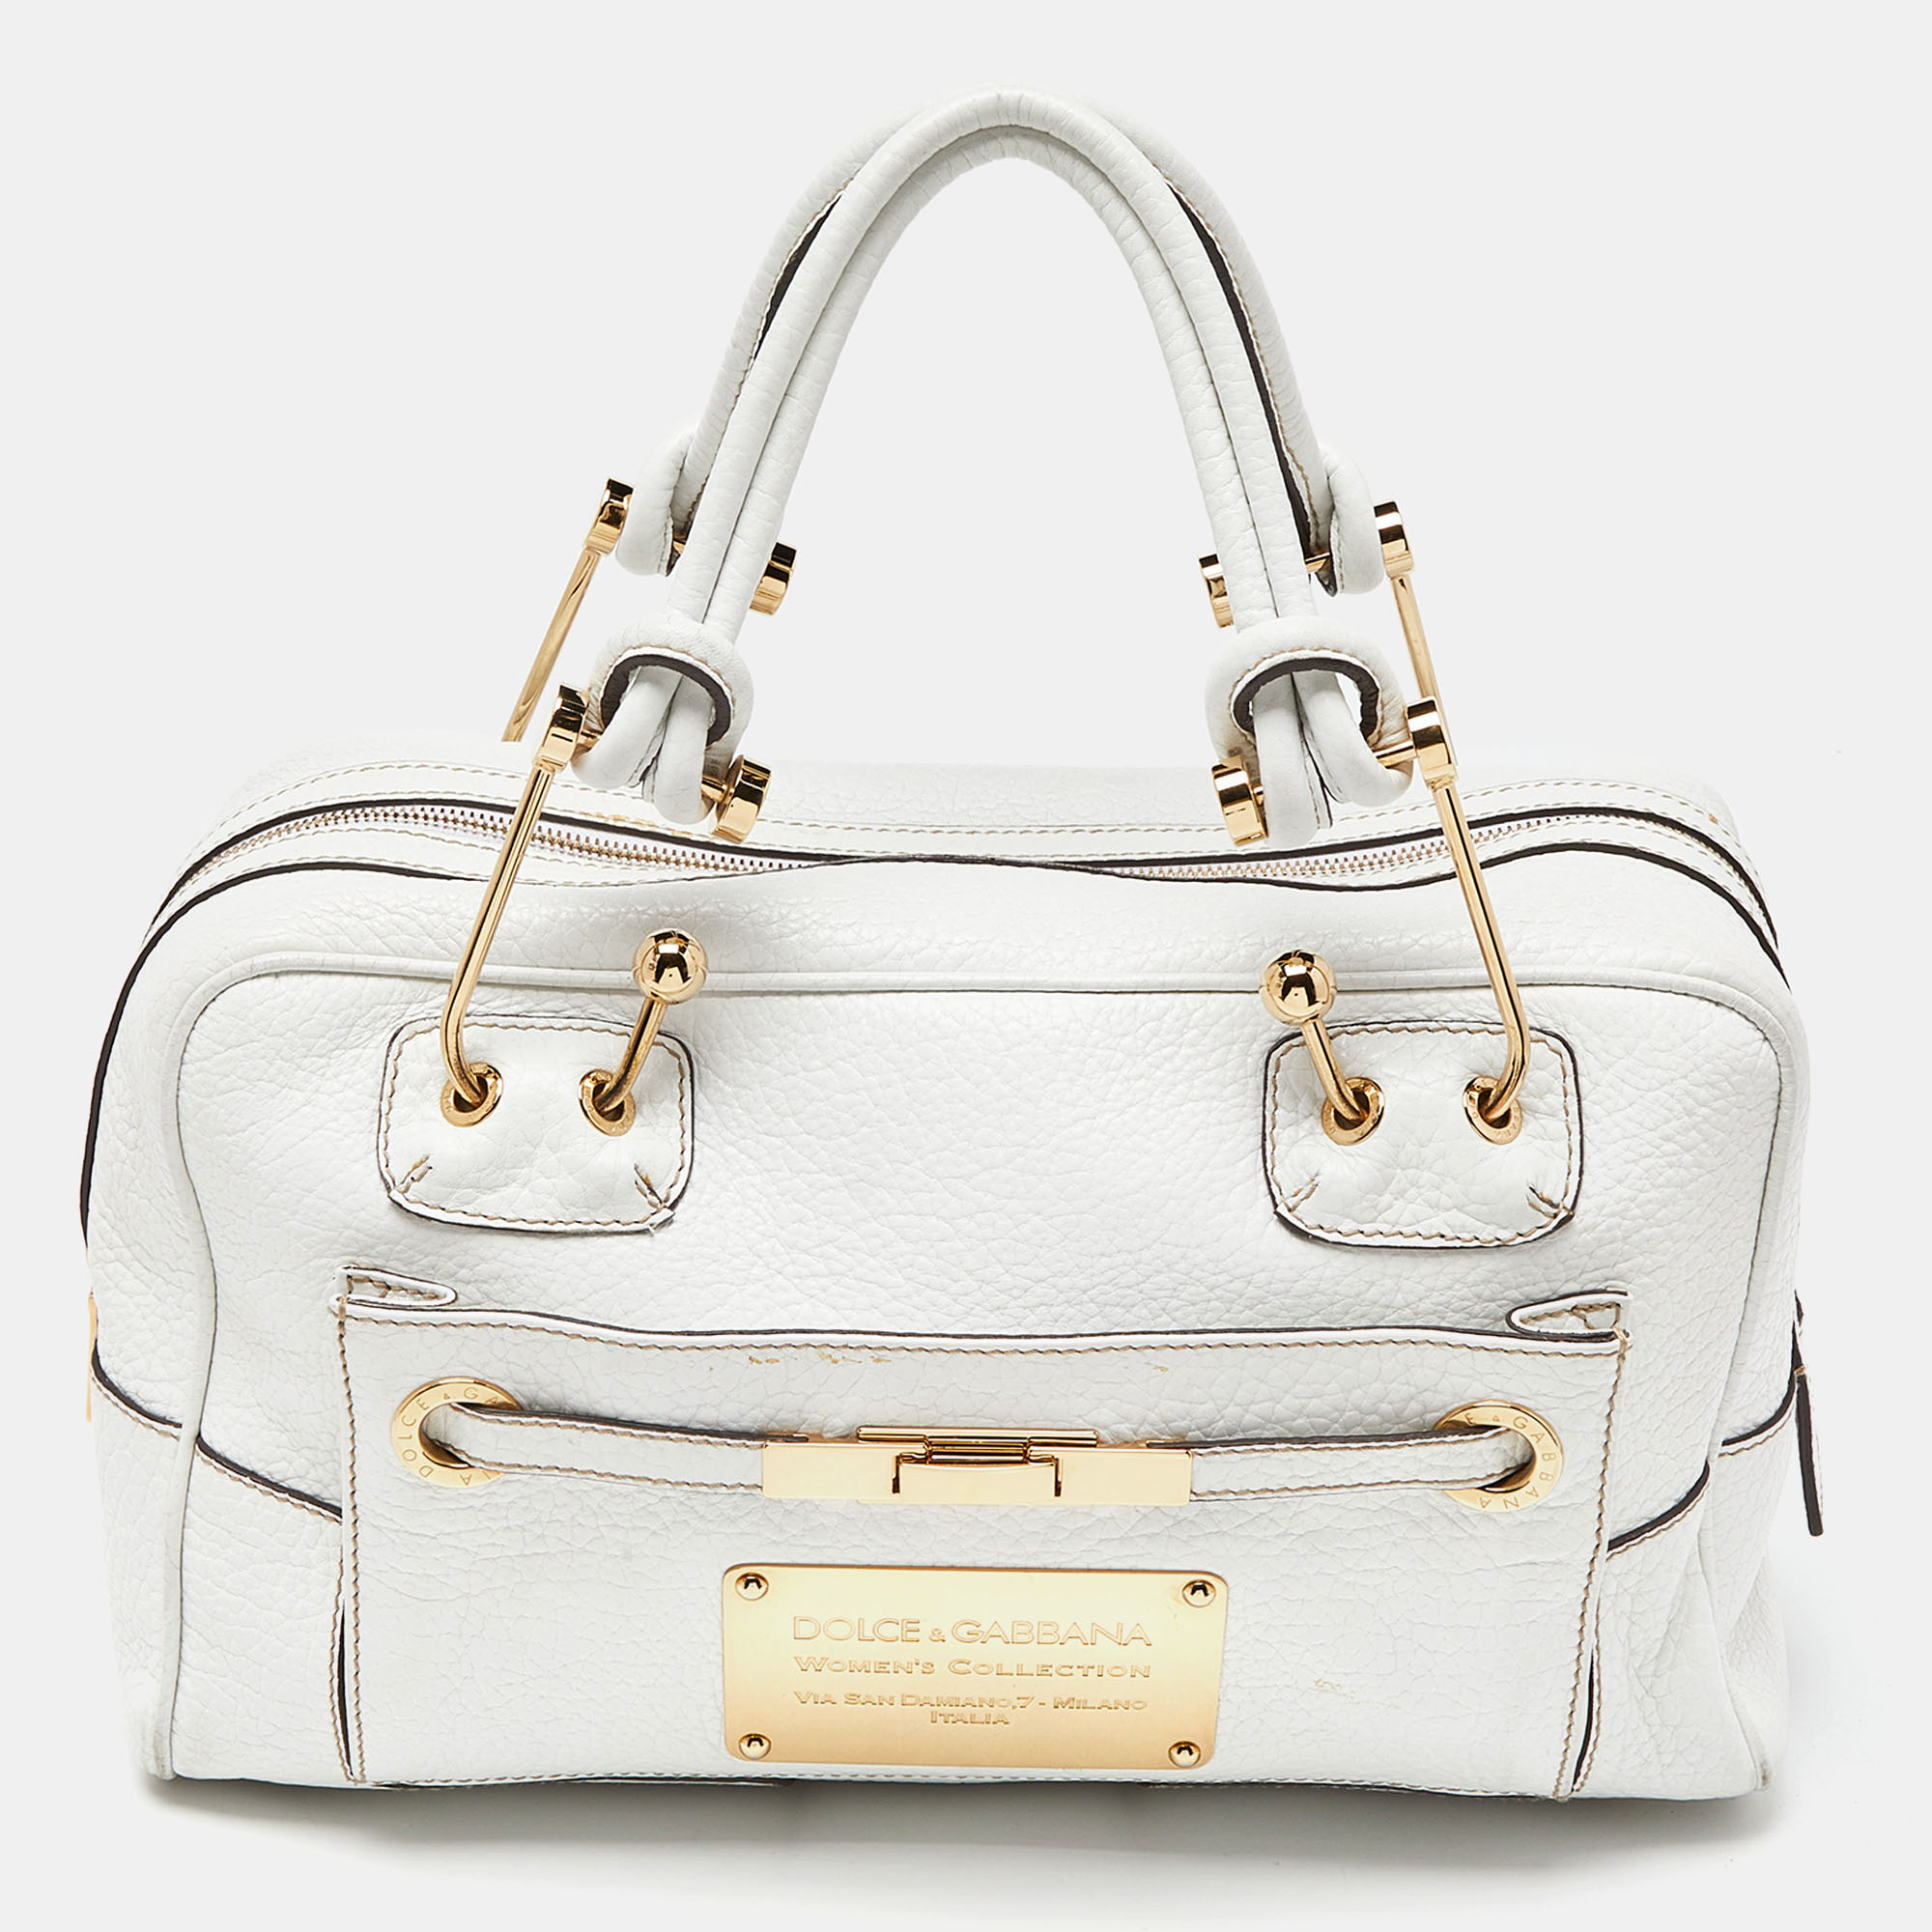 Dolce & gabbana white leather buckle satchel